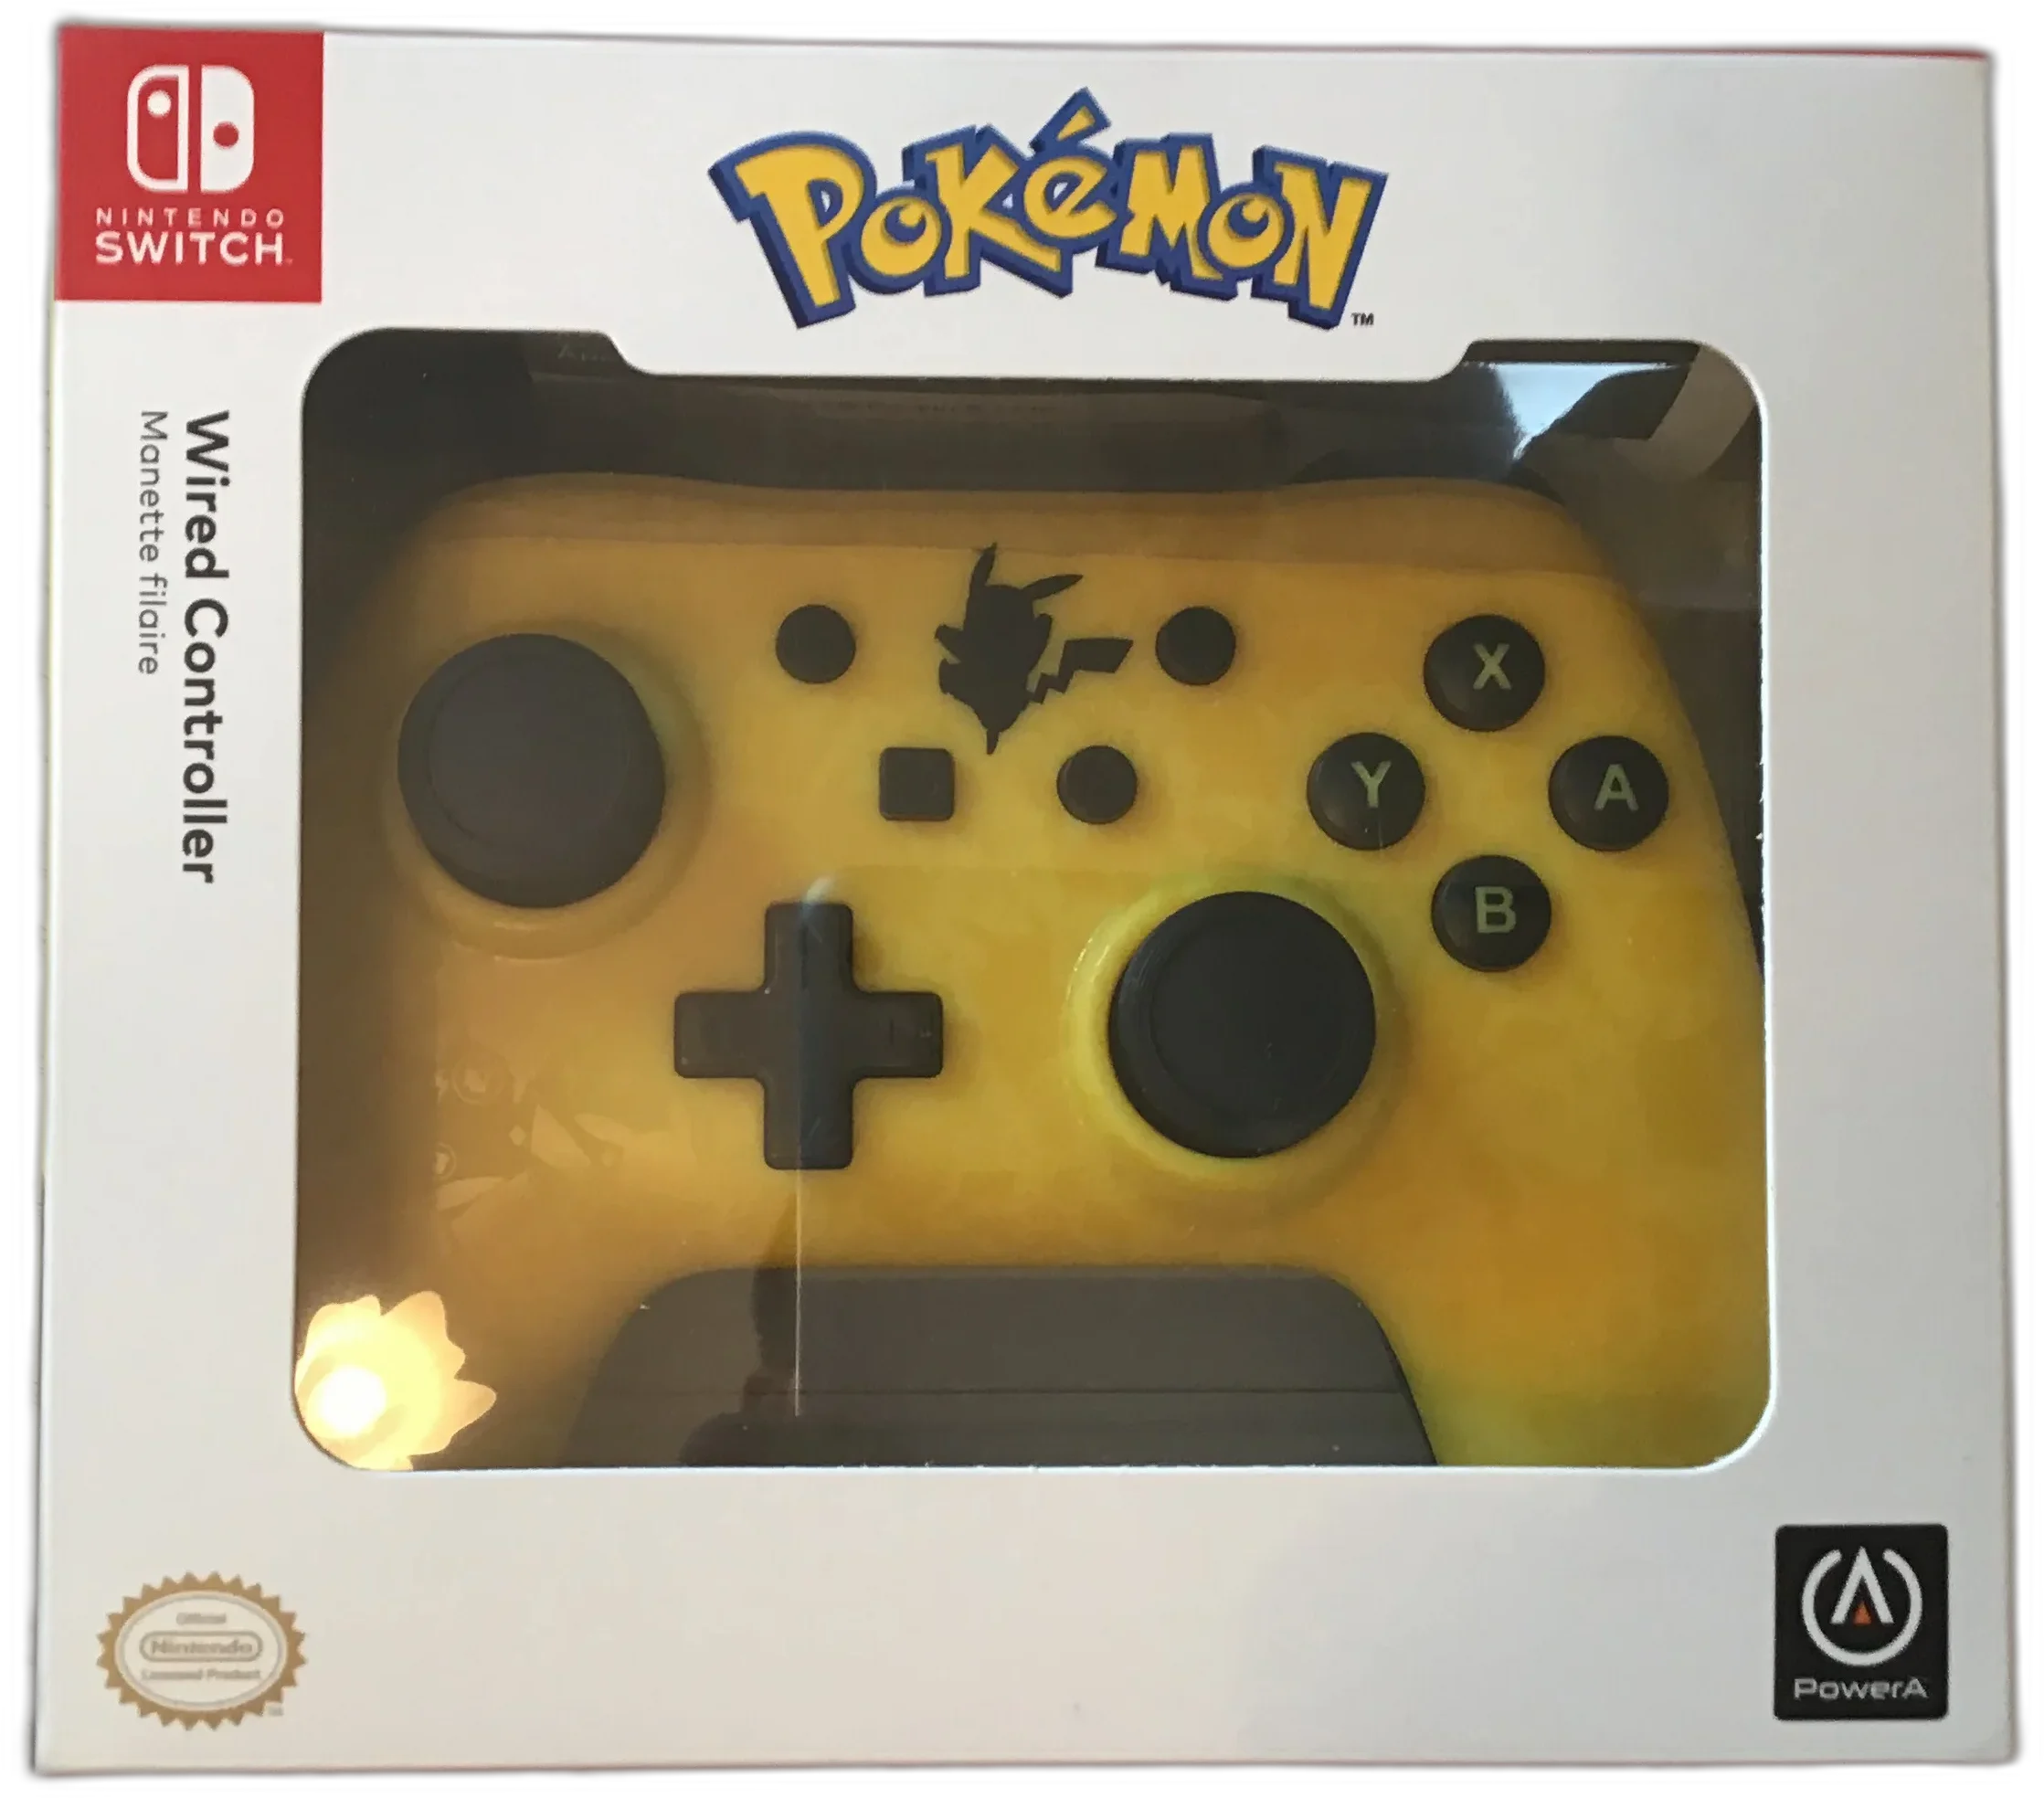  Power A Switch Pokemon Pikachu Controller